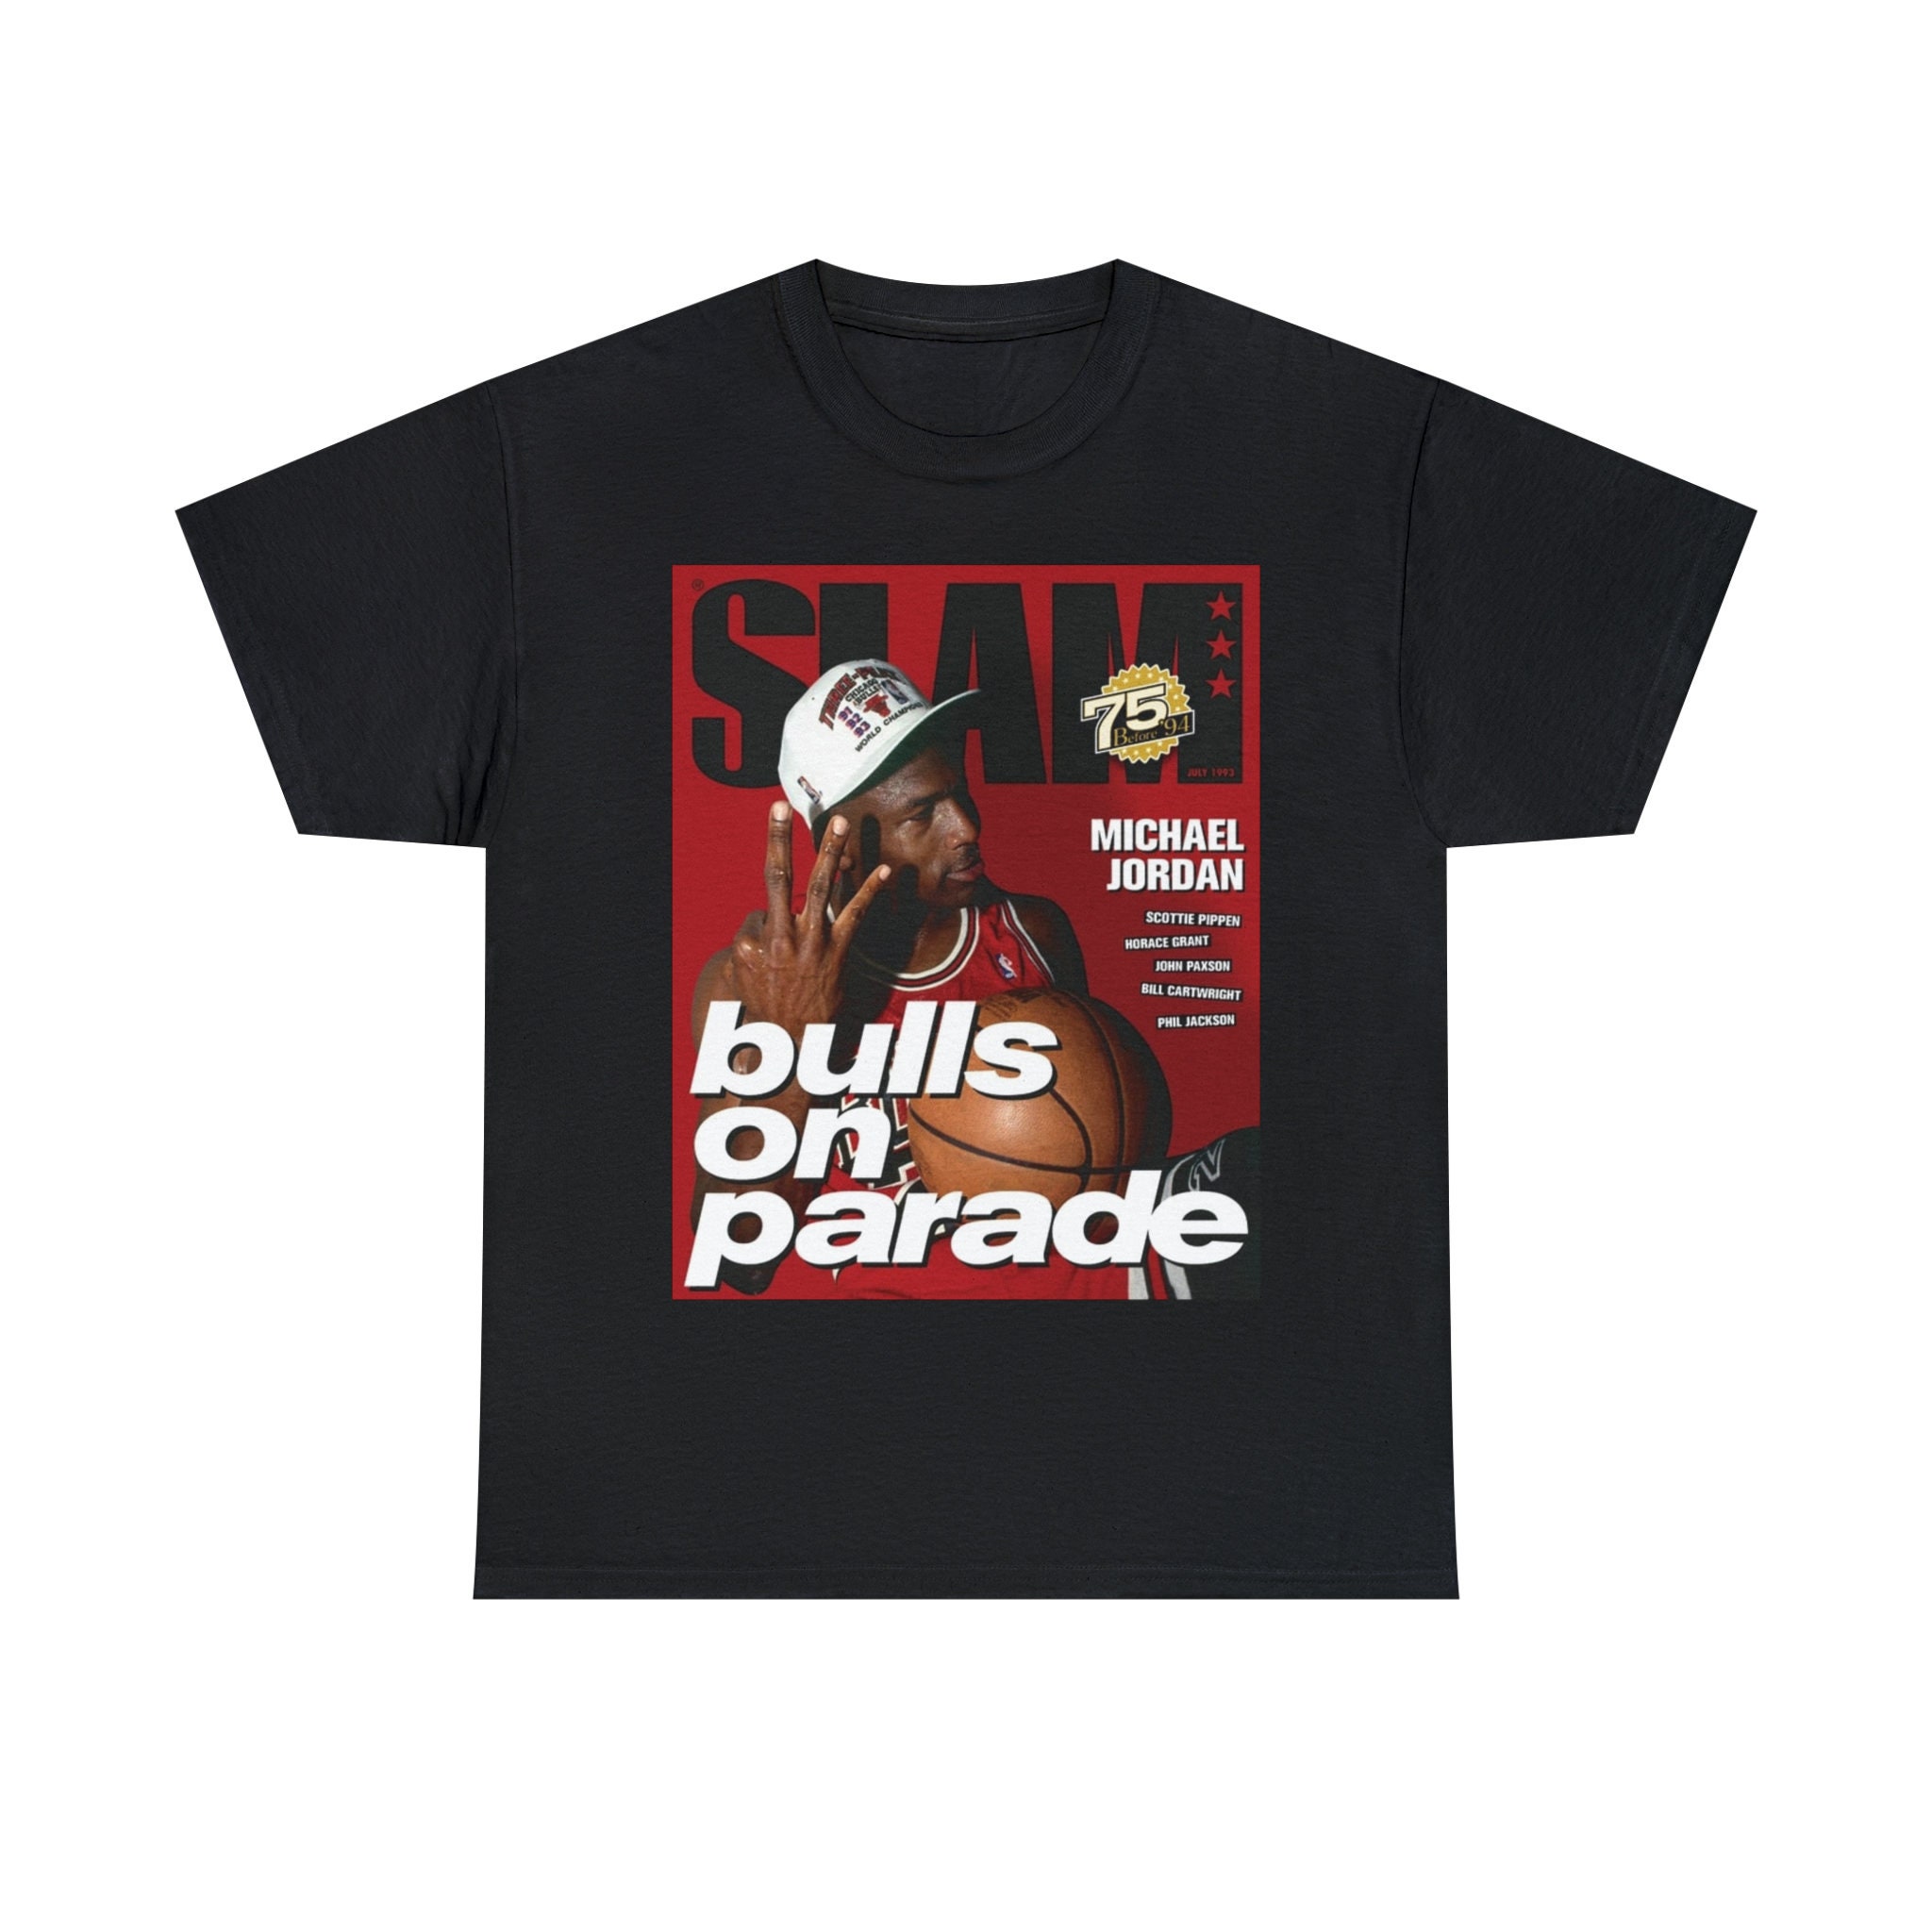 Michael Jordan Chicago Bulls Slam Cover NBA Tee Shirt - Limotees